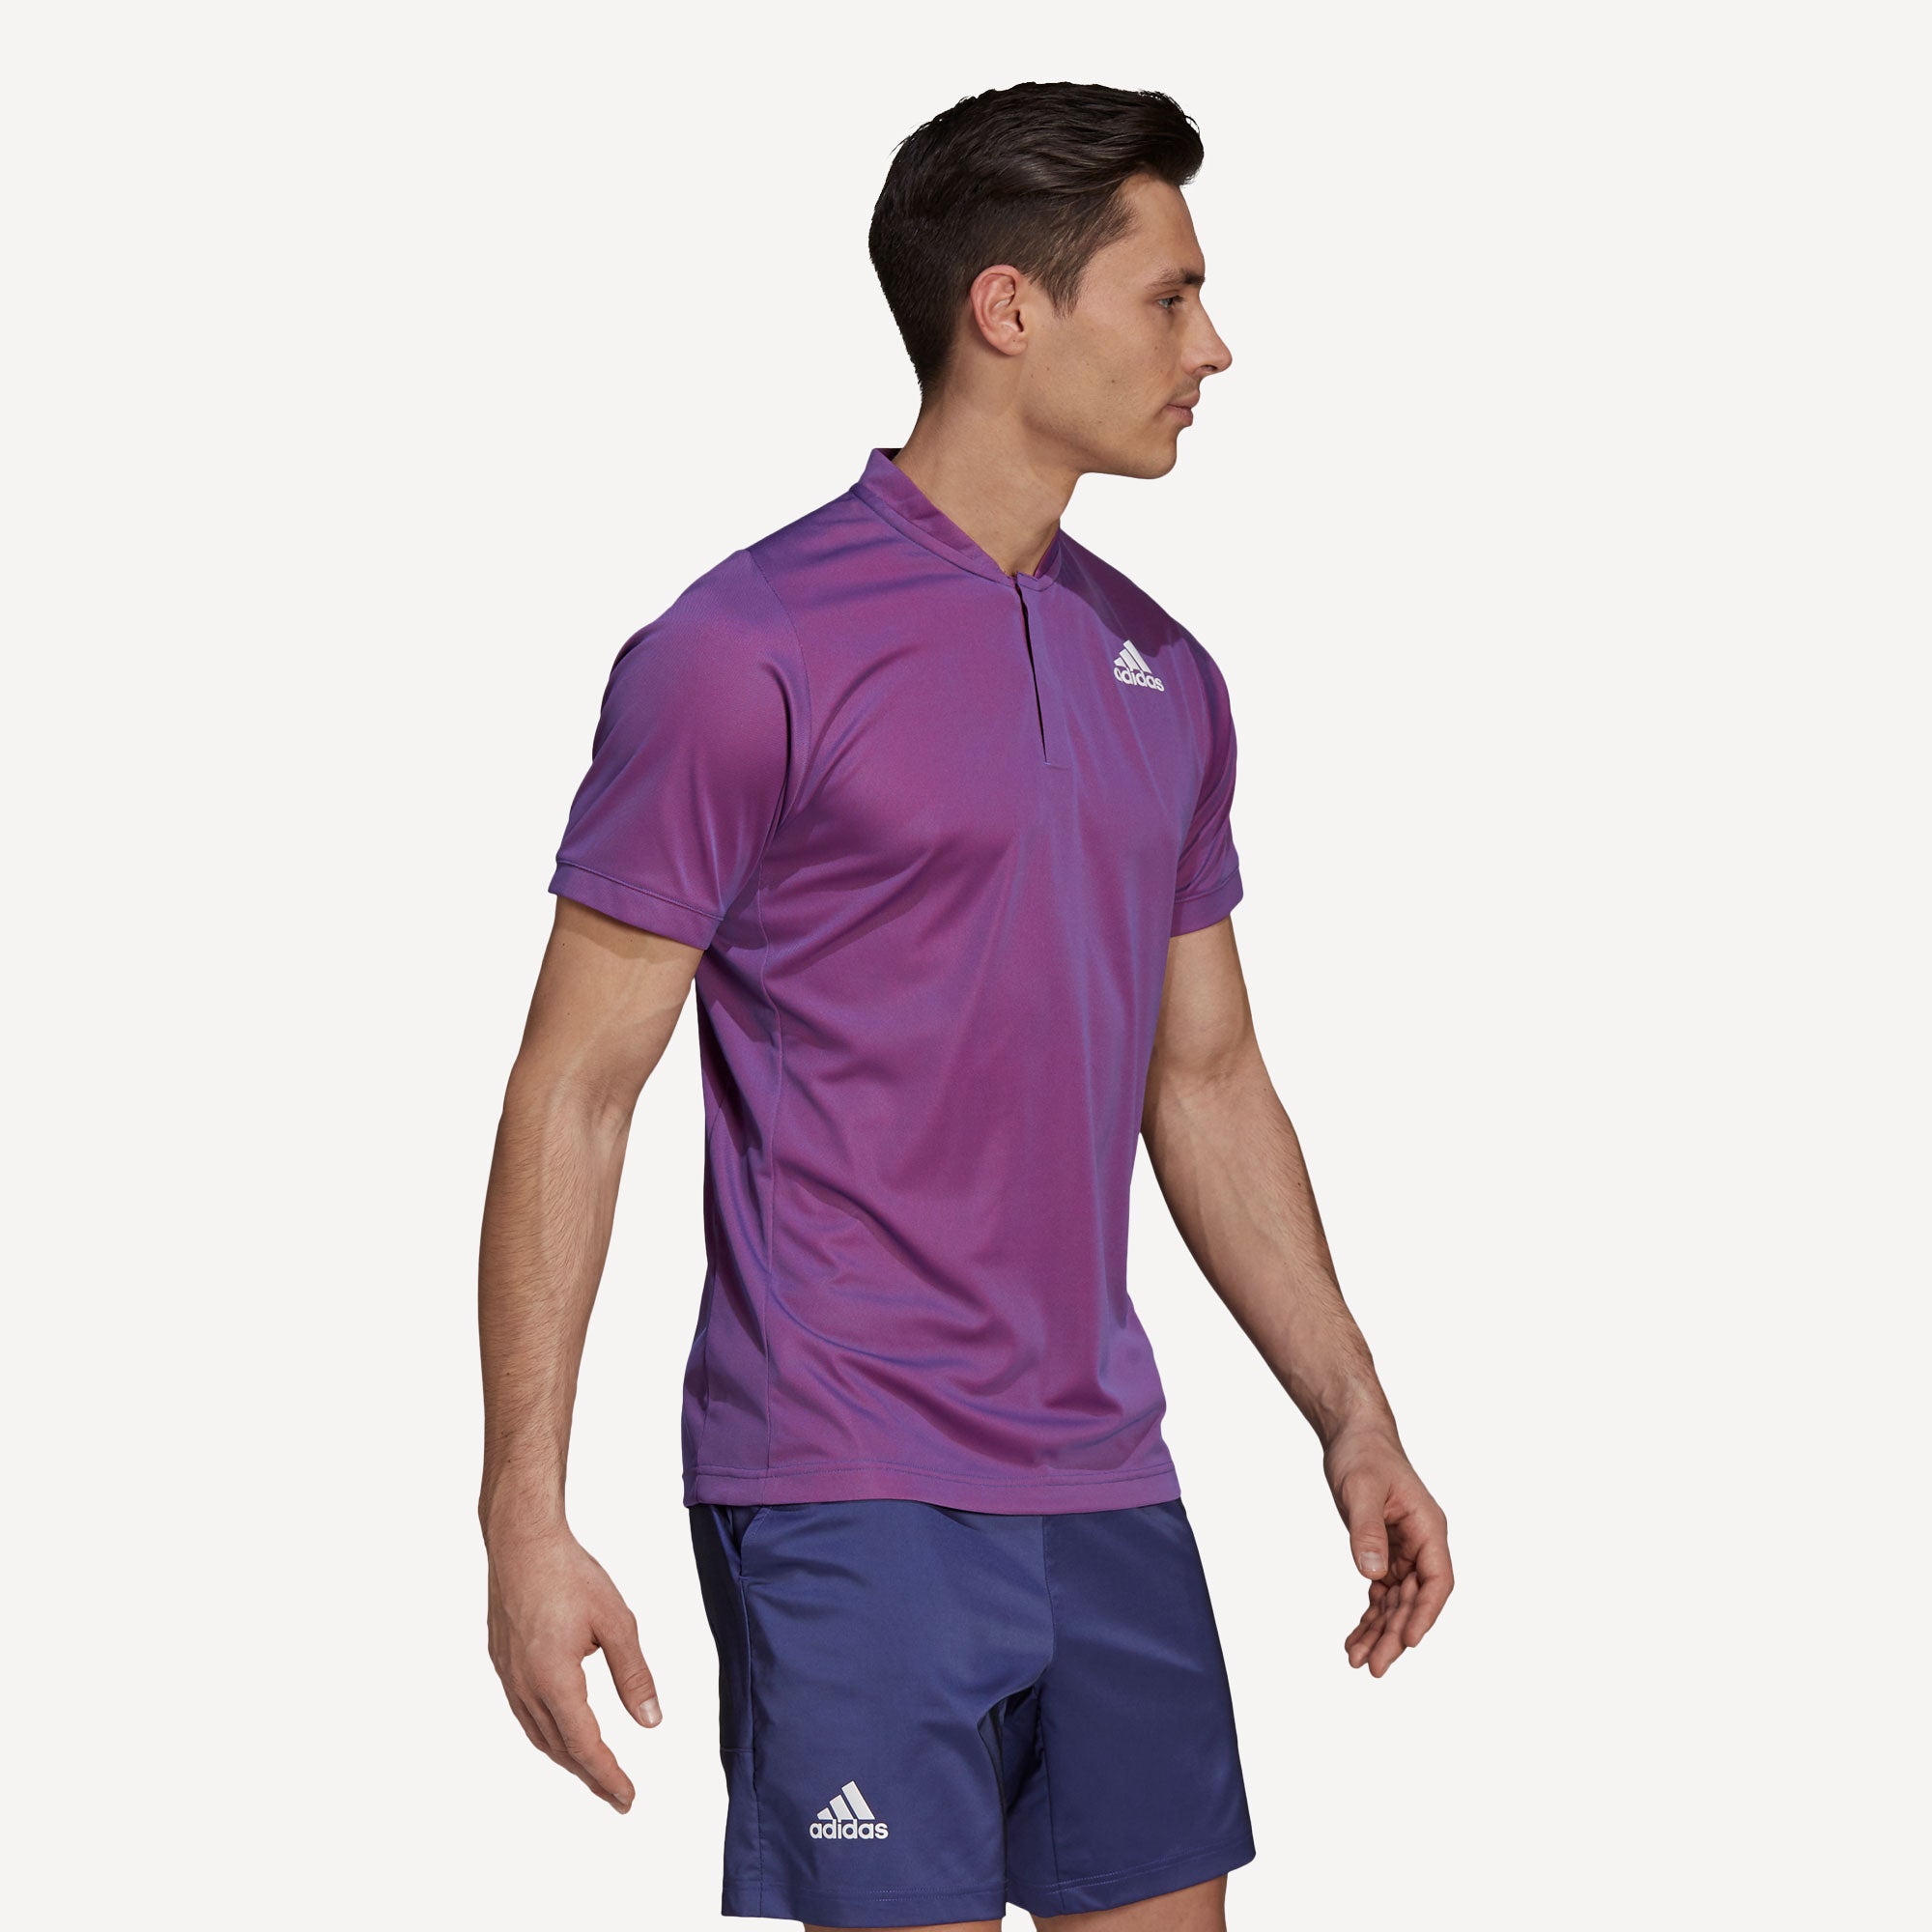 adidas Freelift Primeblue Men's Tennis Polo Purple (3)